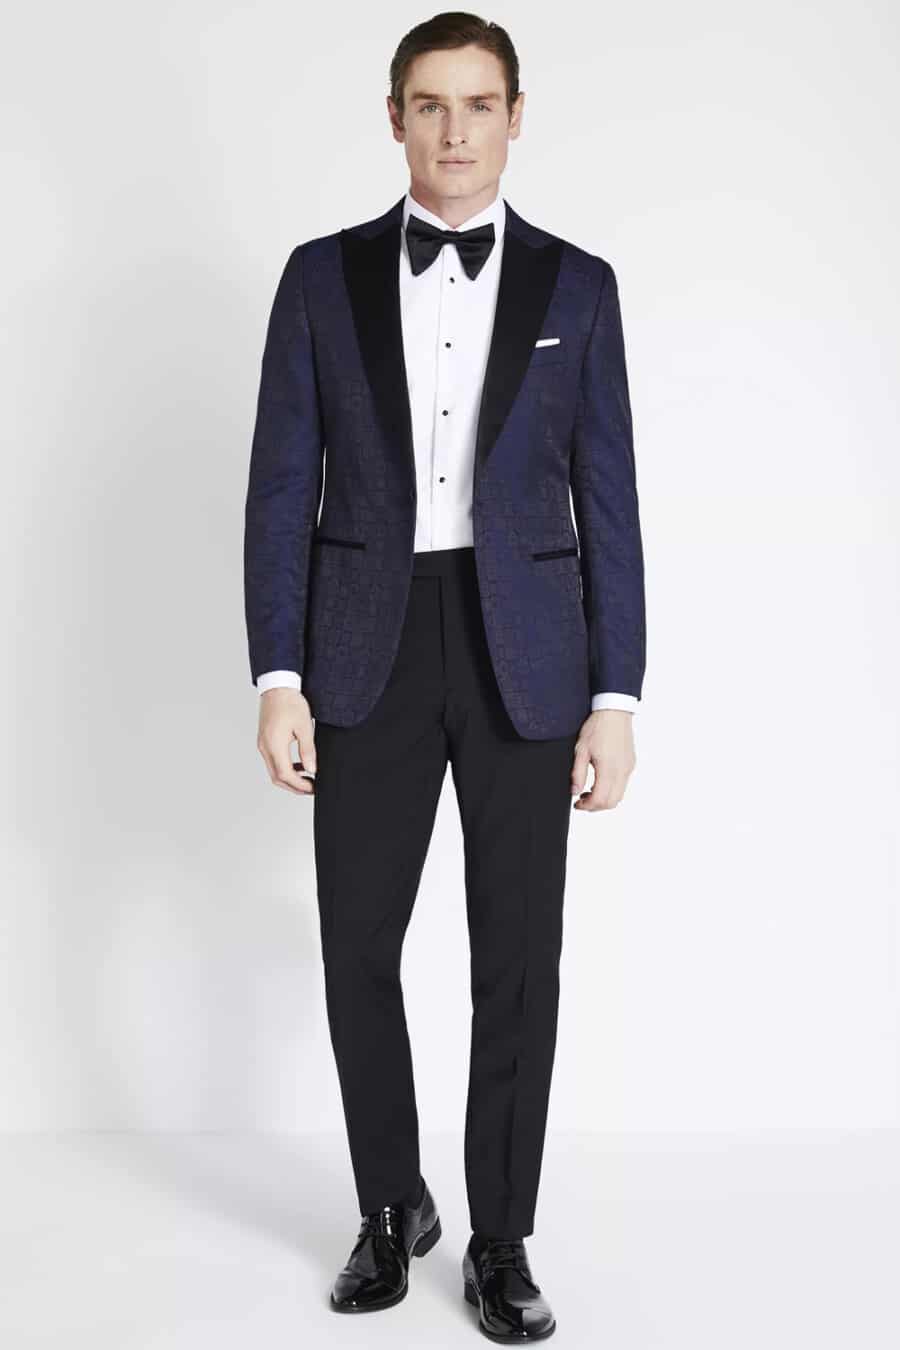 Black Tie Optional Wedding Outfit Men 4 900x1350 